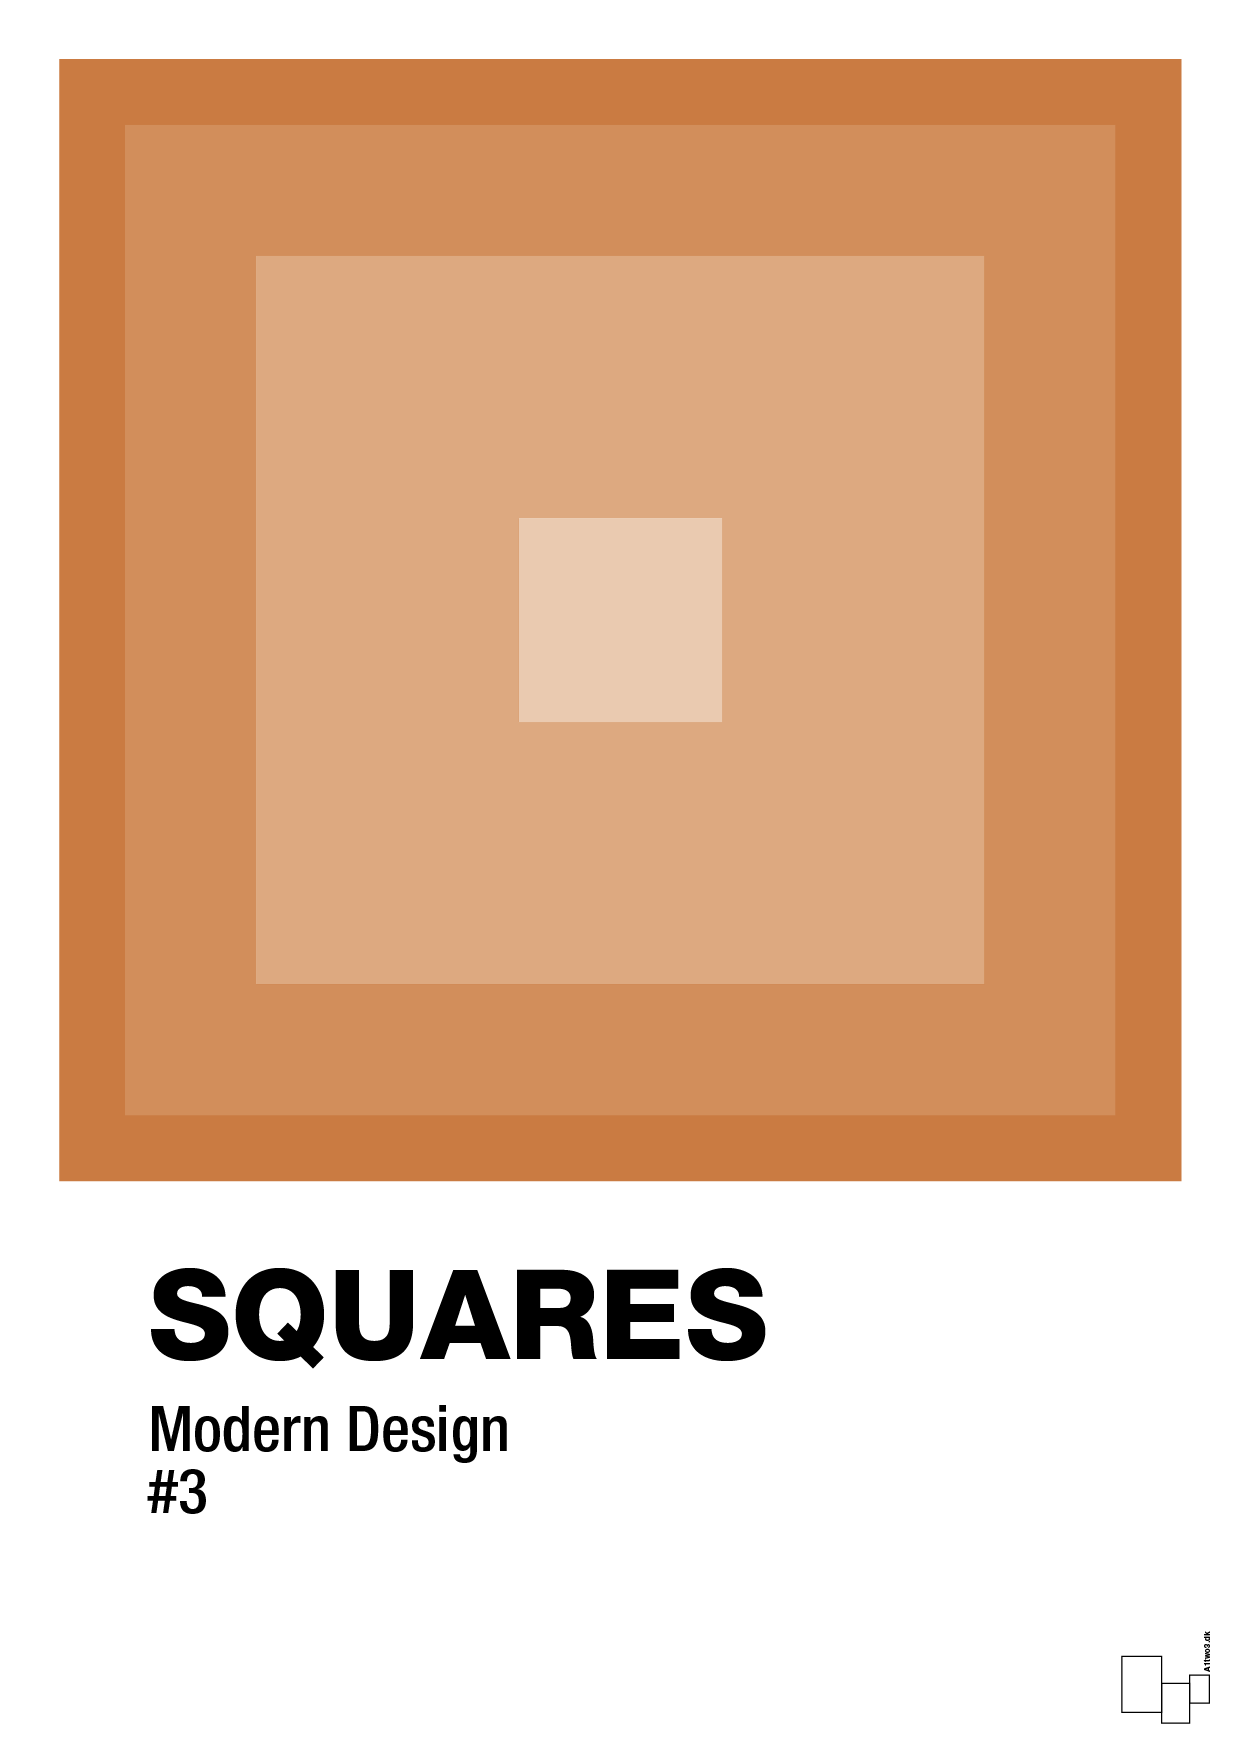 squares #3 - Plakat med Grafik i Rumba Orange